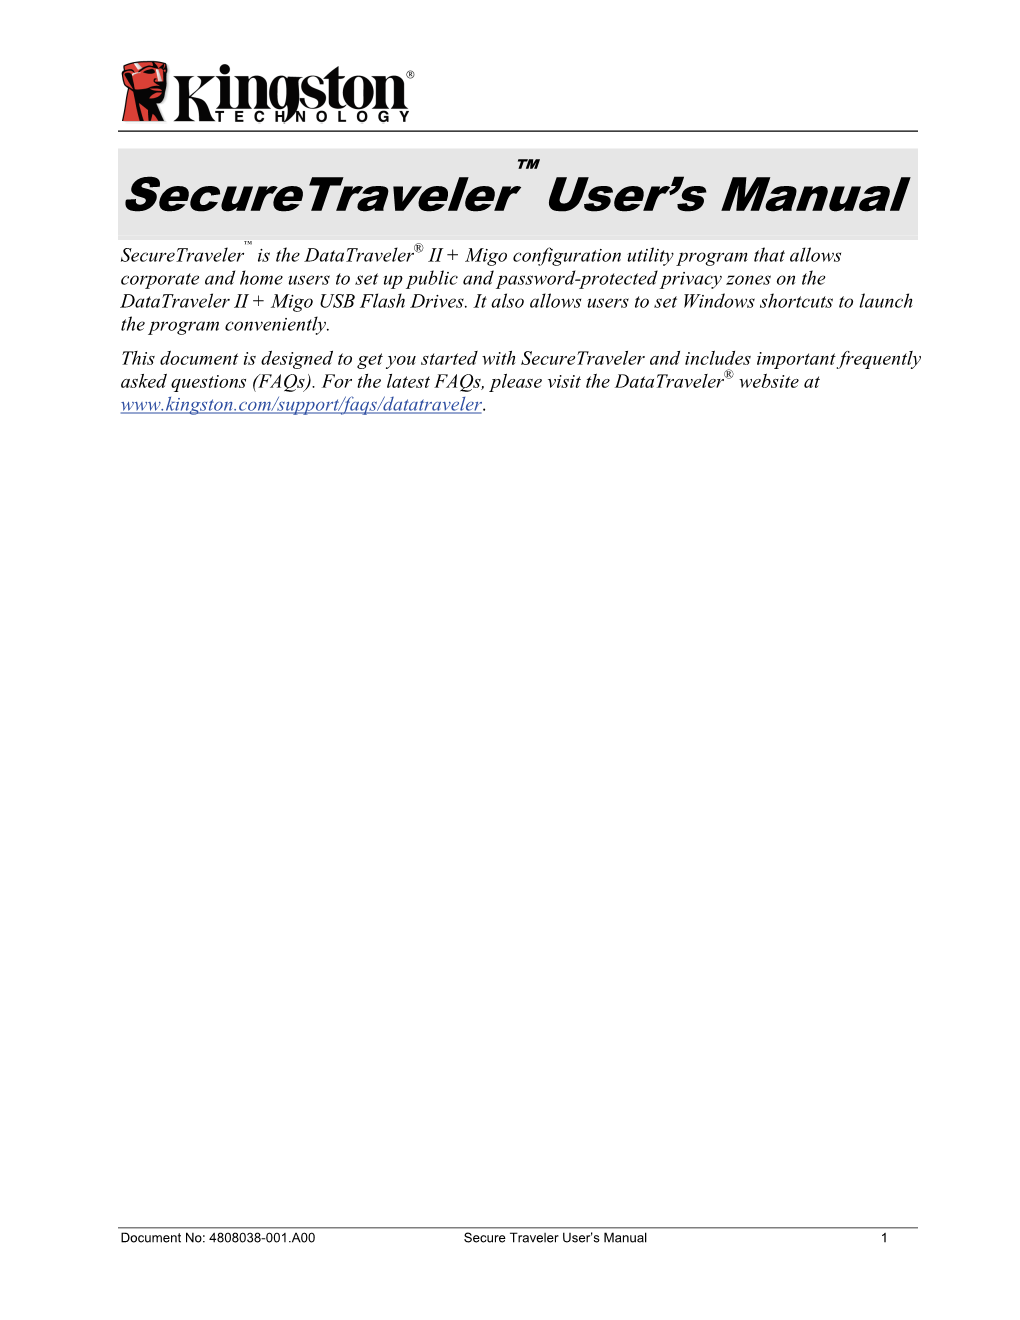 Securetraveler™ User's Manual